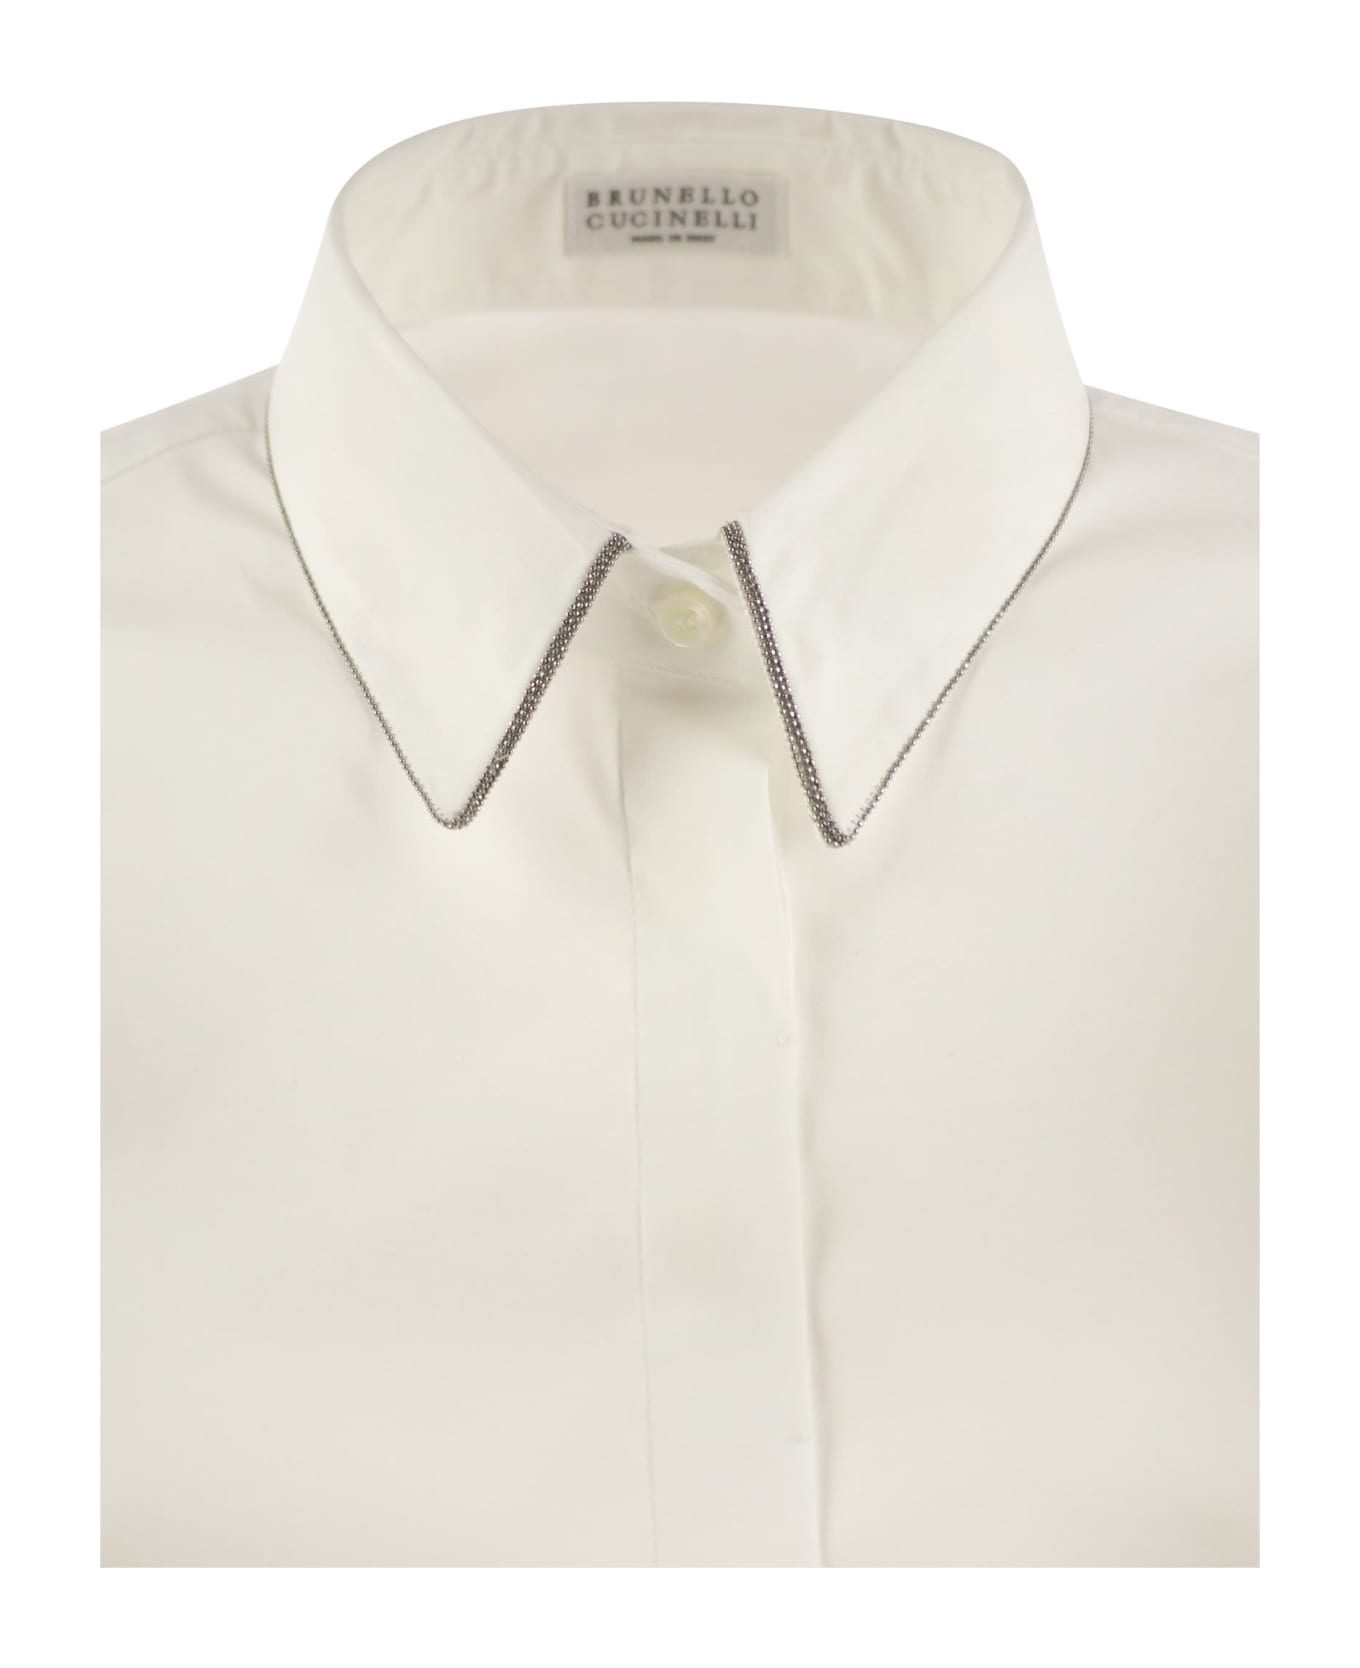 Brunello Cucinelli Stretch Cotton Poplin Shirt With Shiny Trim - White